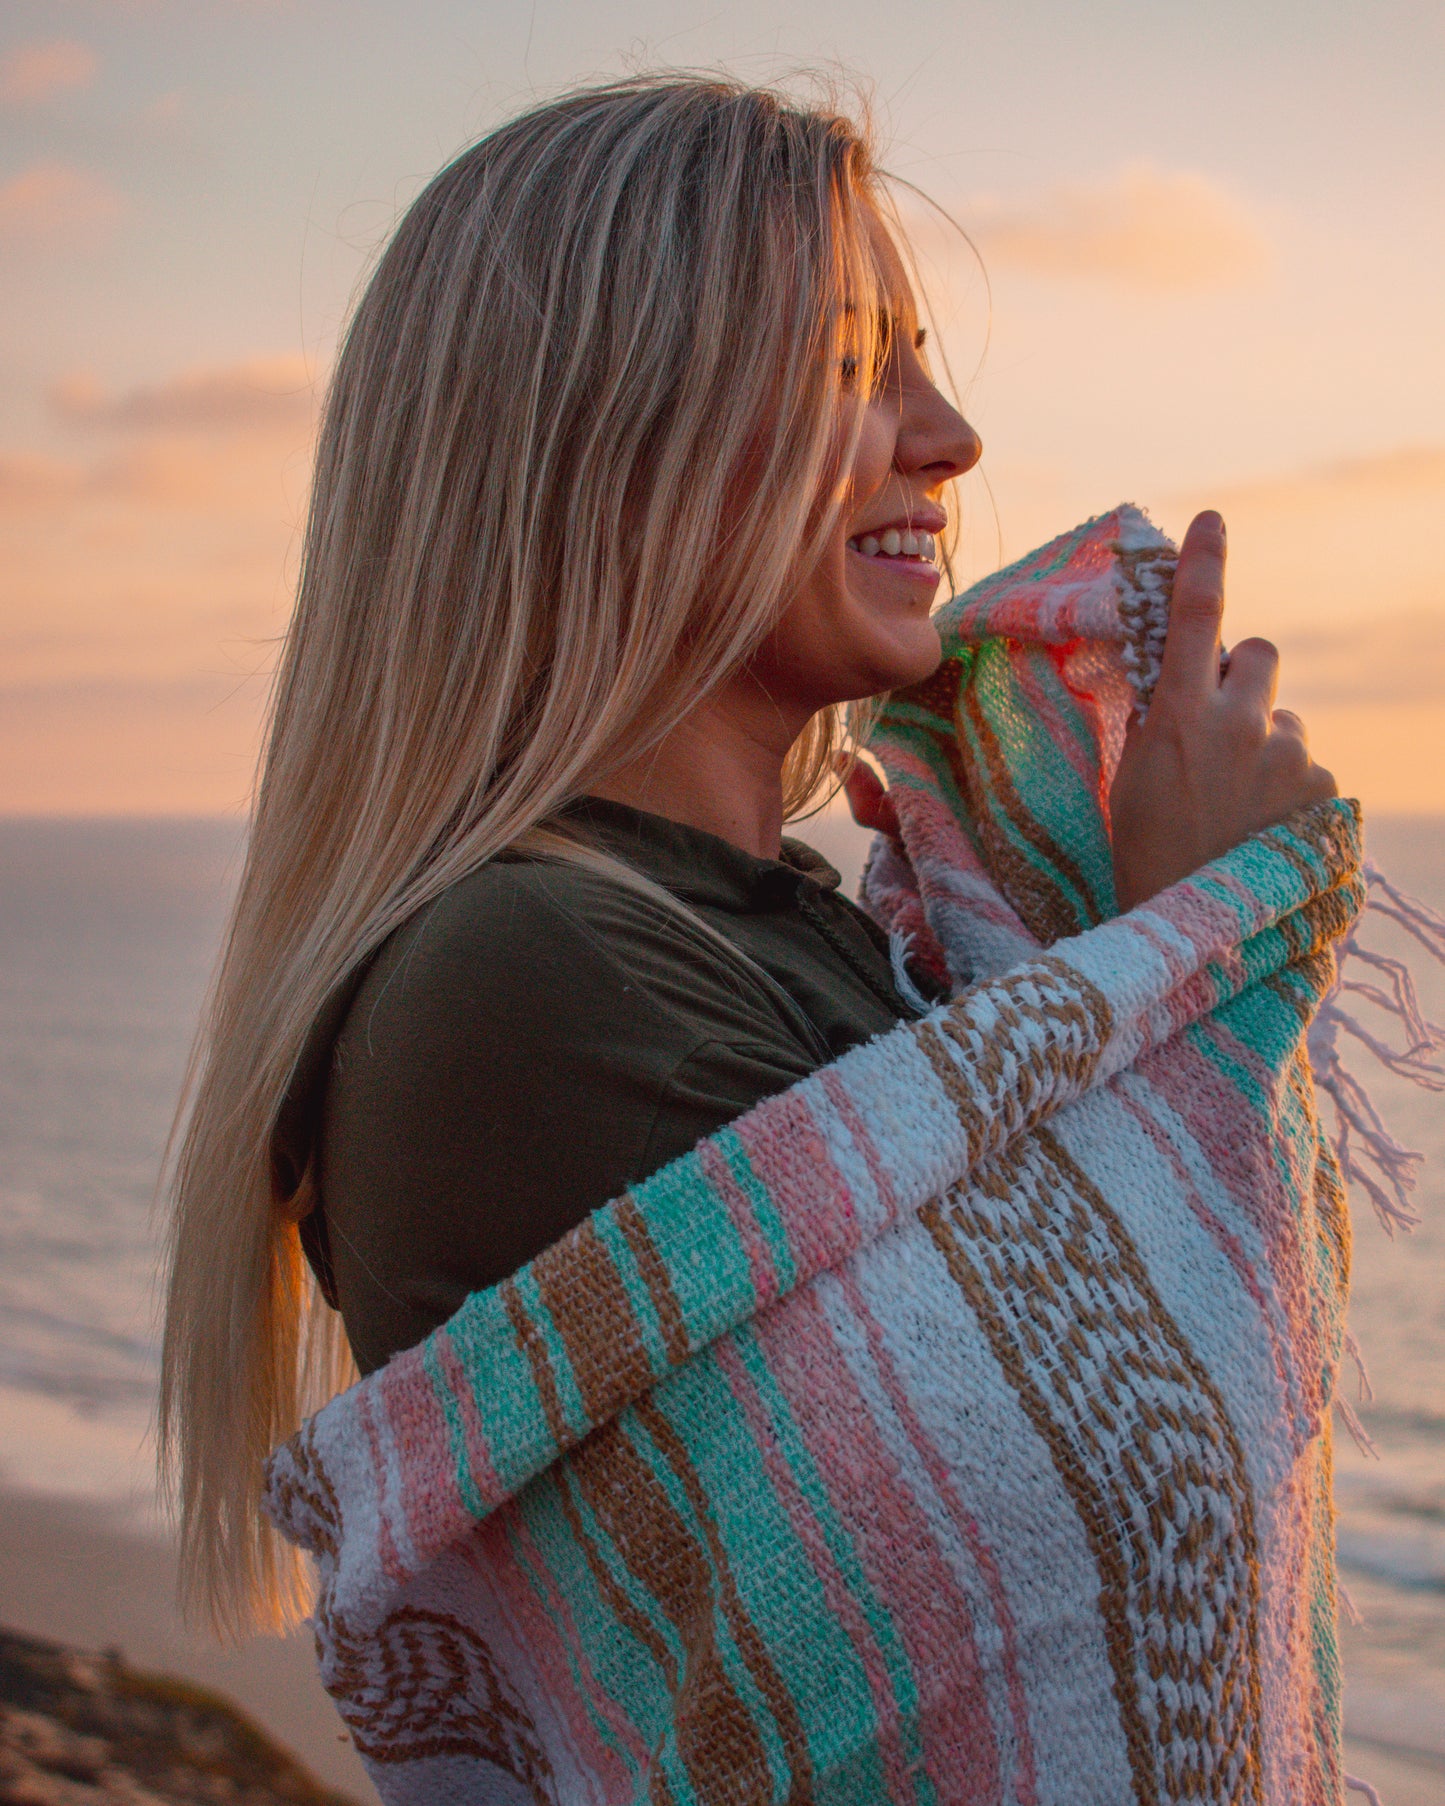 Mexican Blanket, Neopolitan - for Yoga, Camping, Picnics, Beach